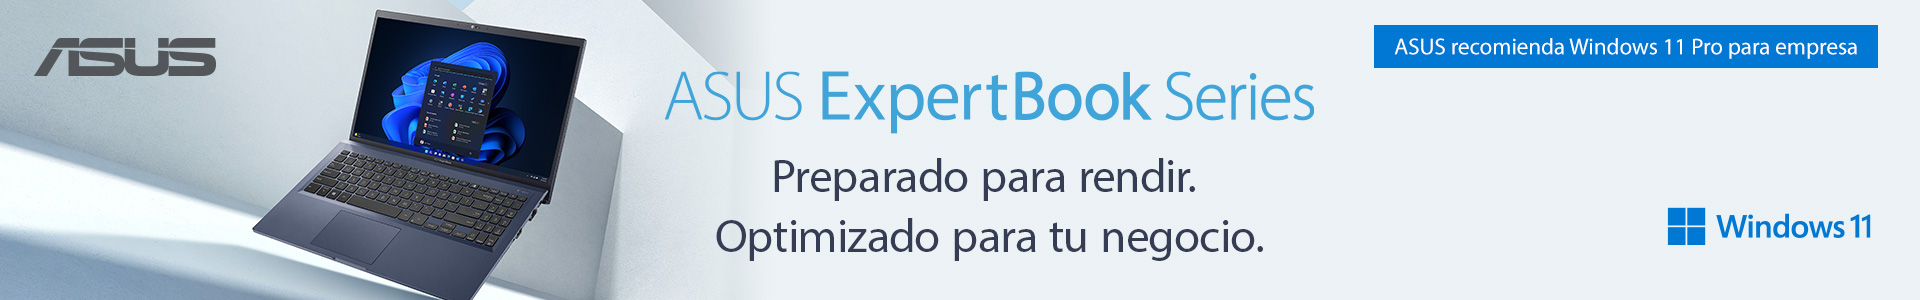 Expertbook-generico